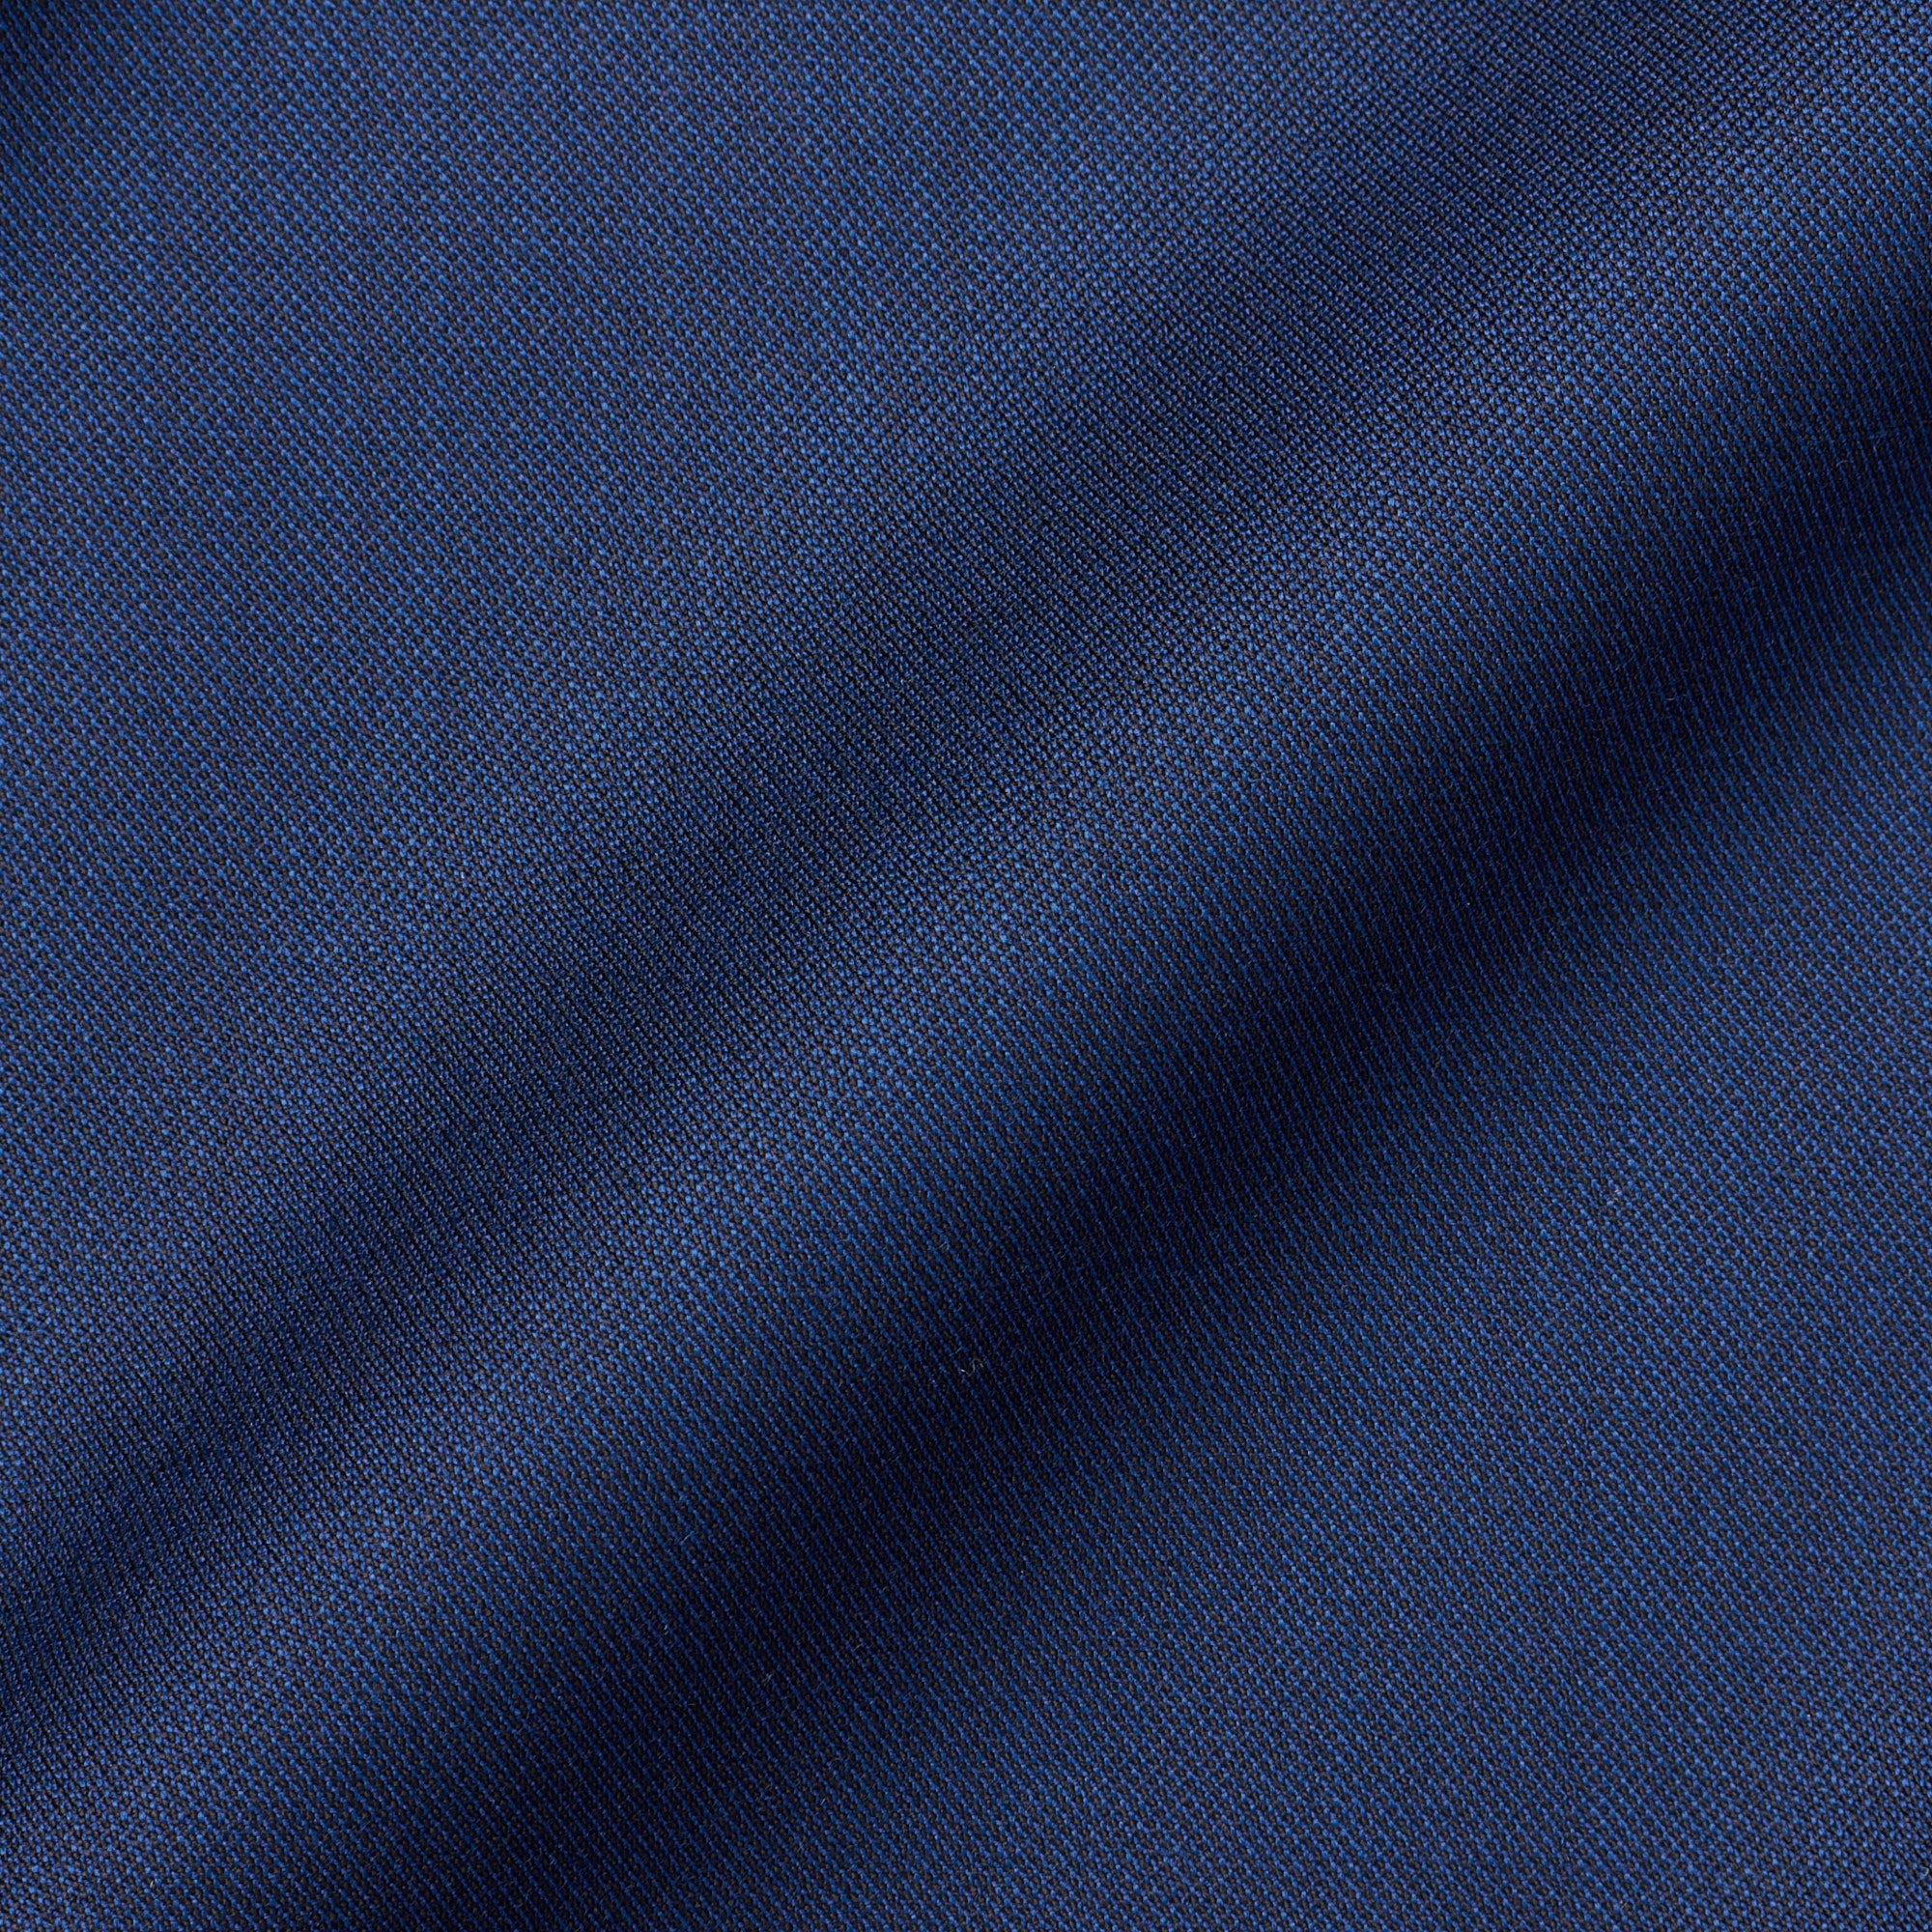 KITON Napoli for VANNUCCI Handmade Blue Wool Suit EU 54 NEW US 44 Regular Fit KITON